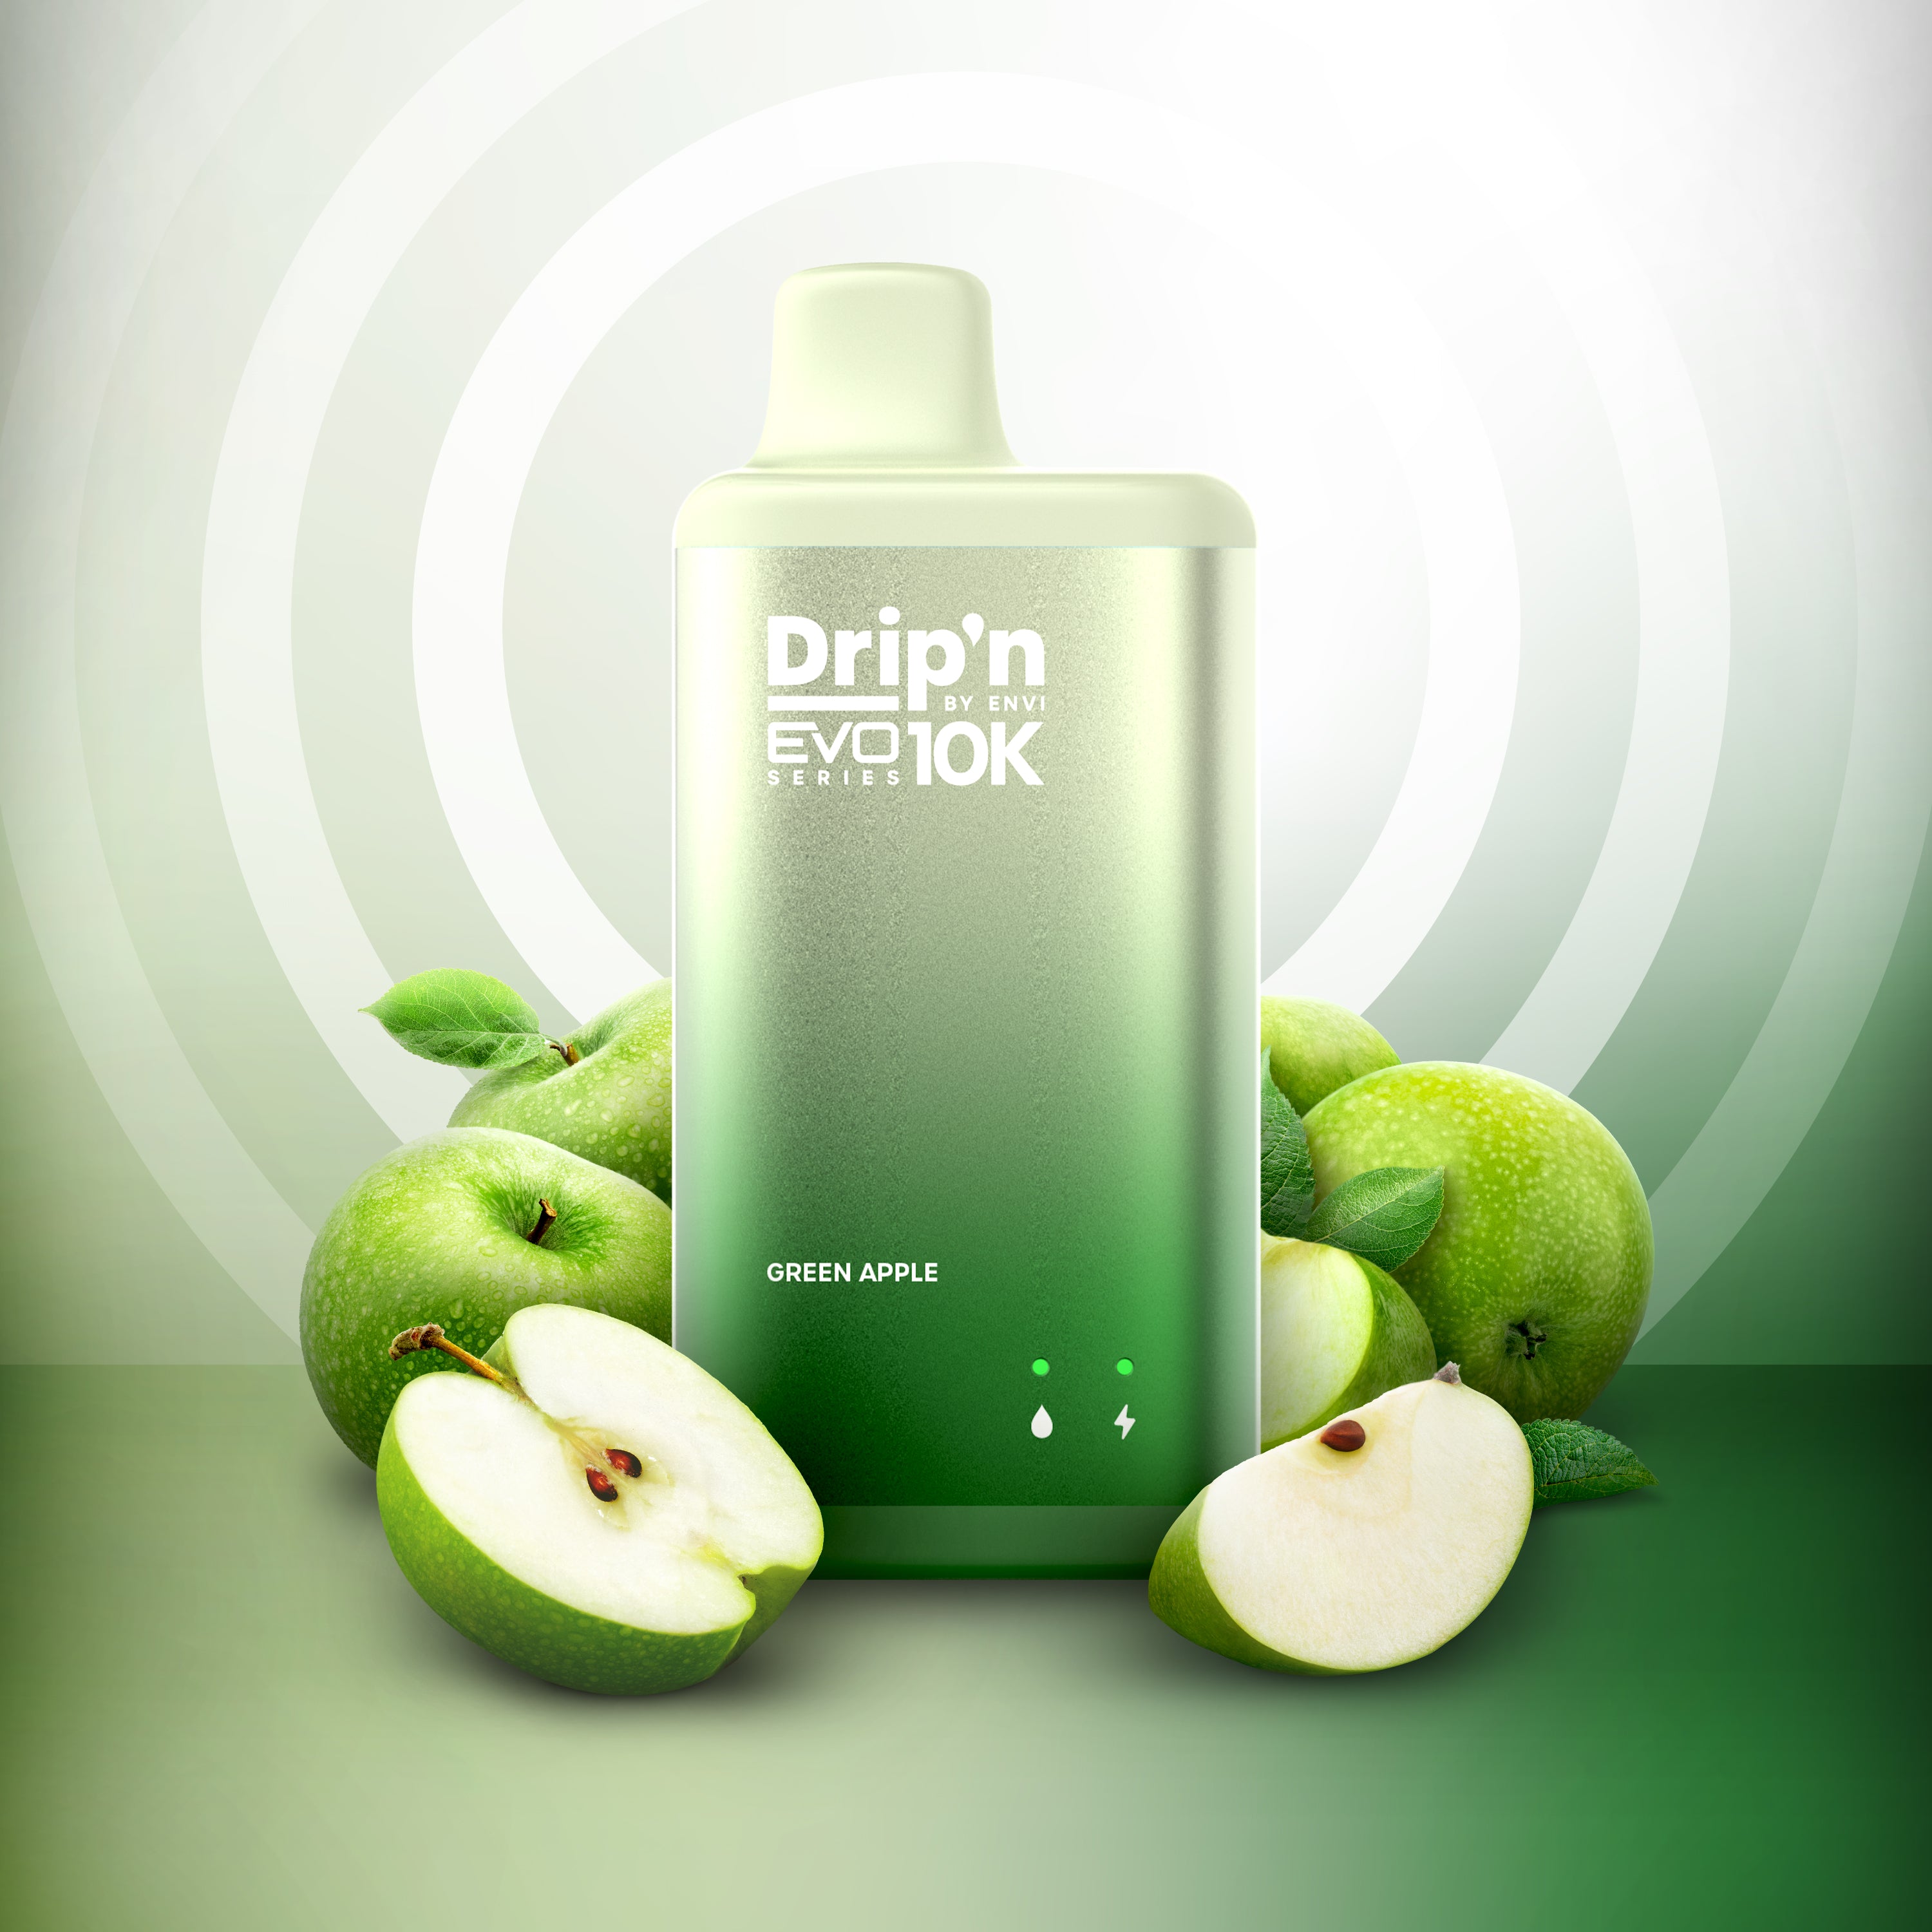 Green Apple - Drip'n by Envi EVO 10K - 5pc/Carton